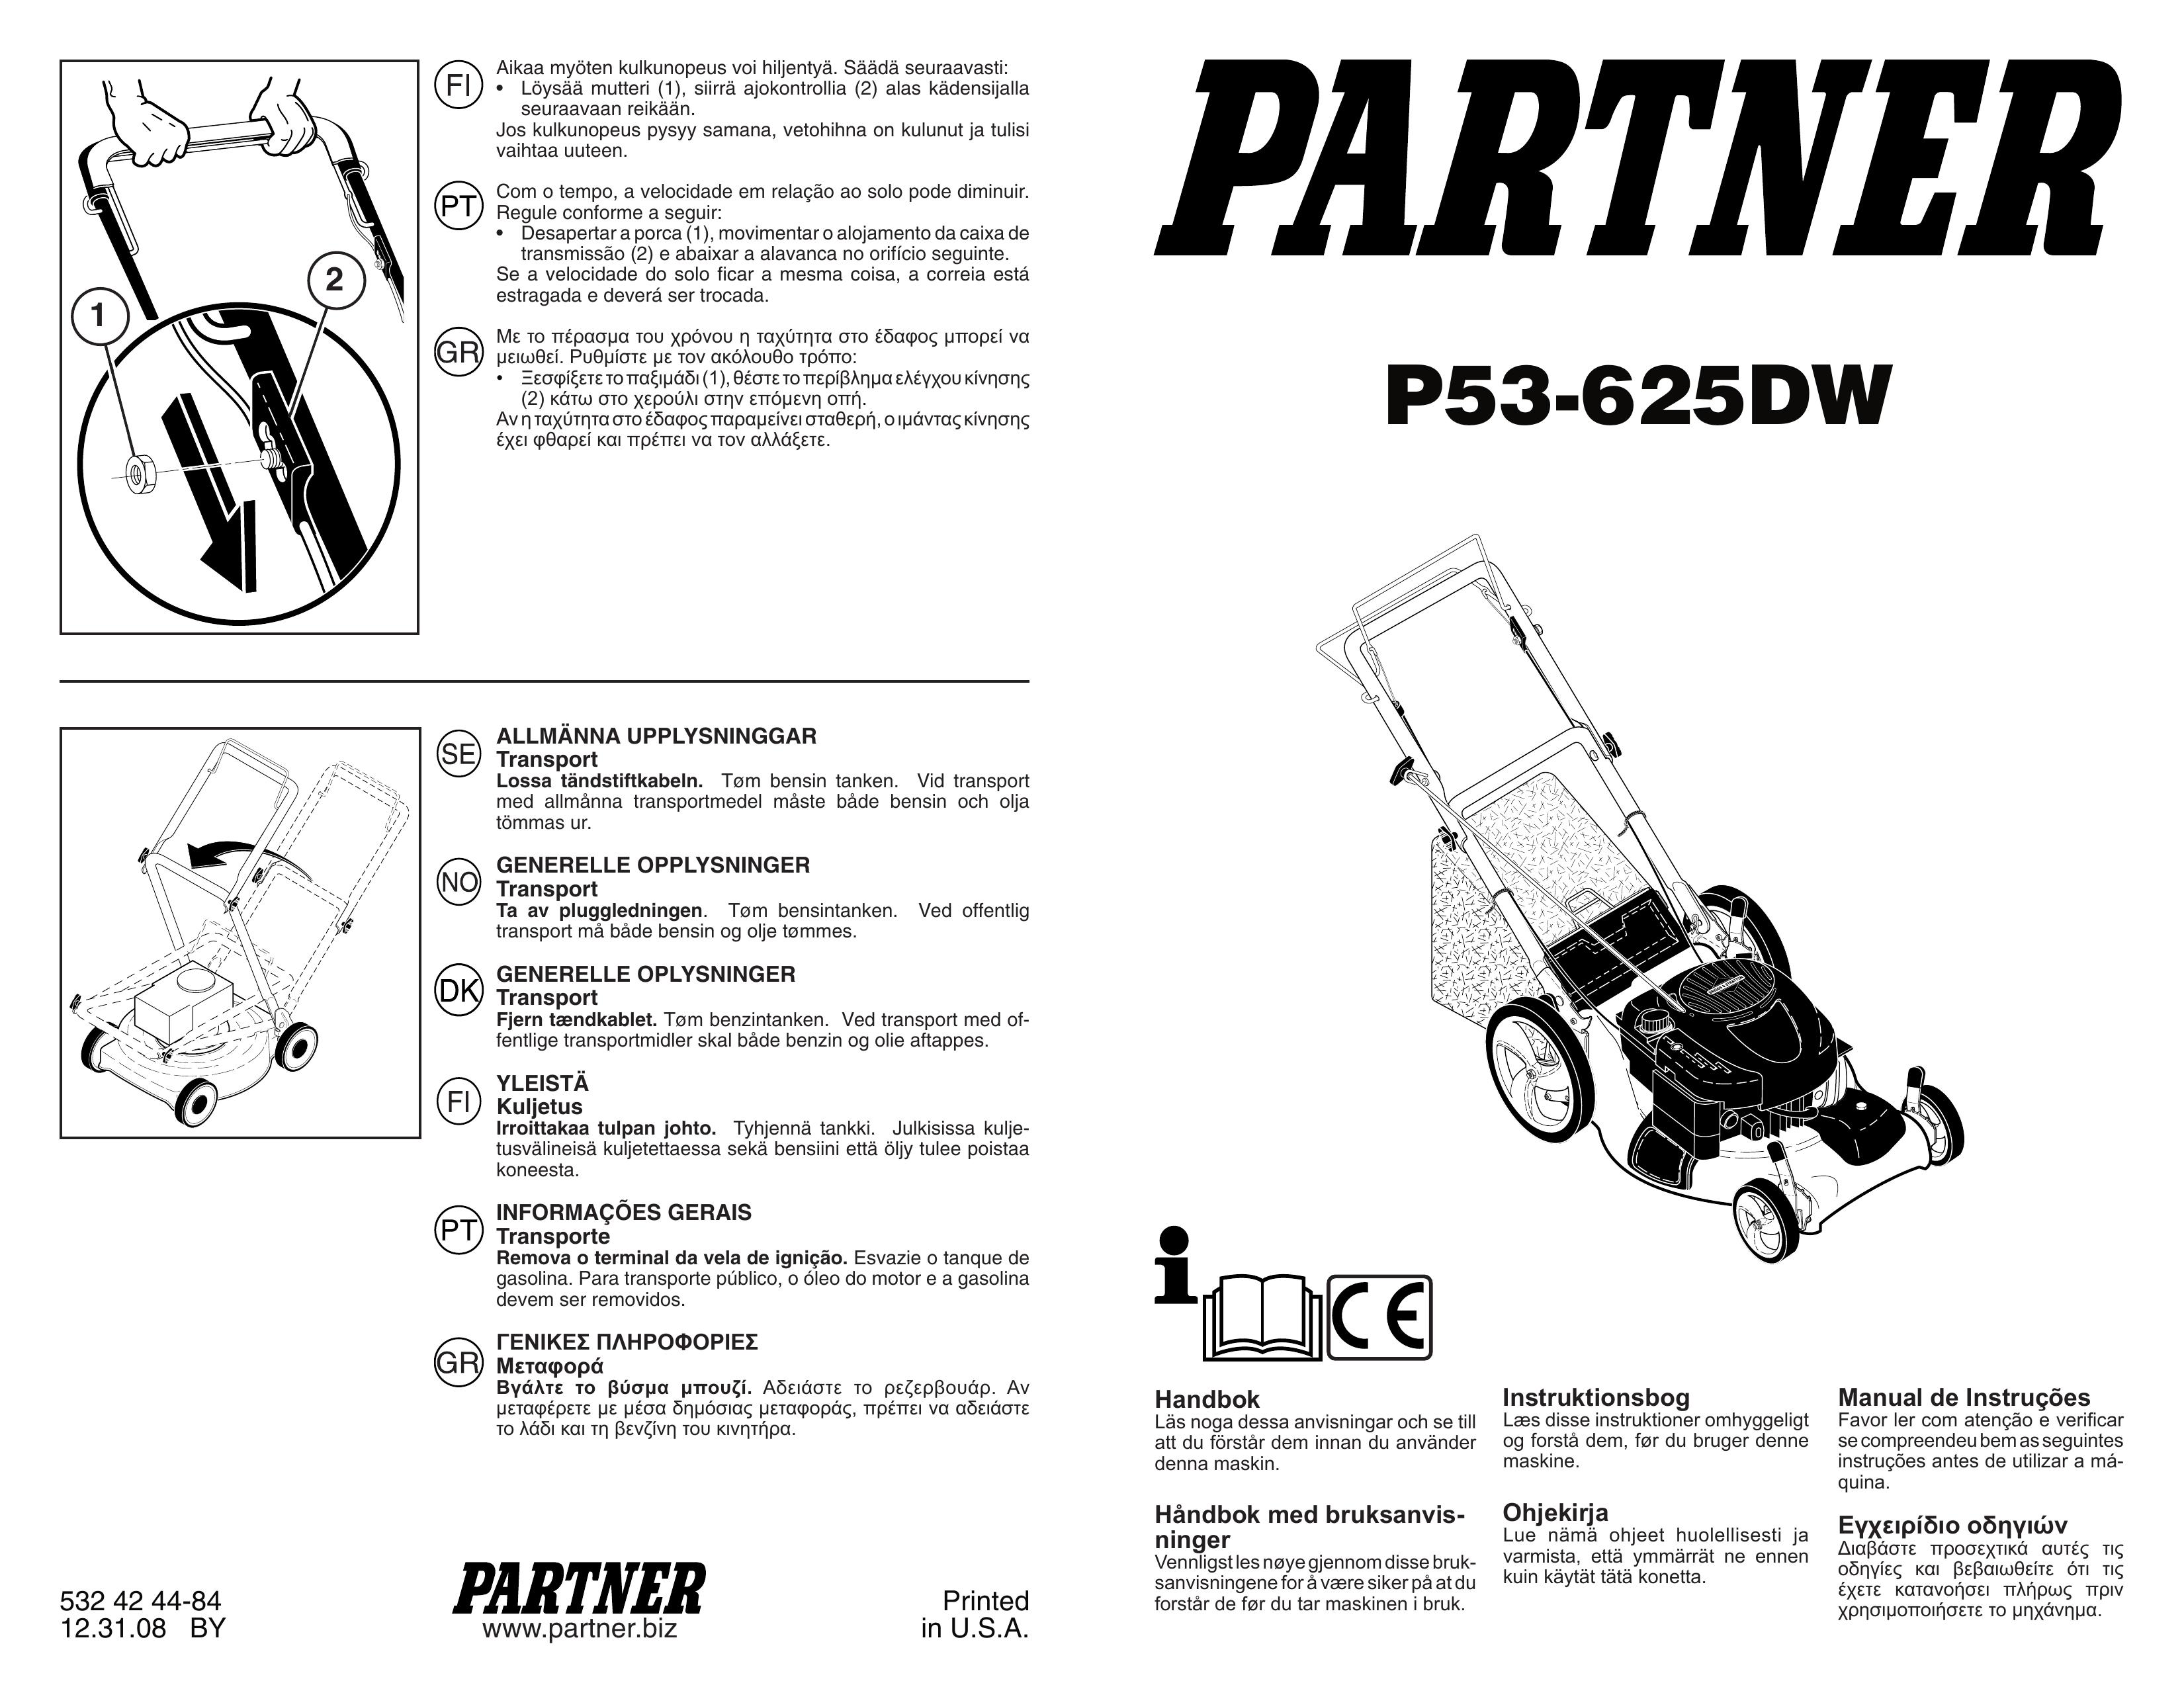 Partner Tech P53-625DW Lawn Mower User Manual